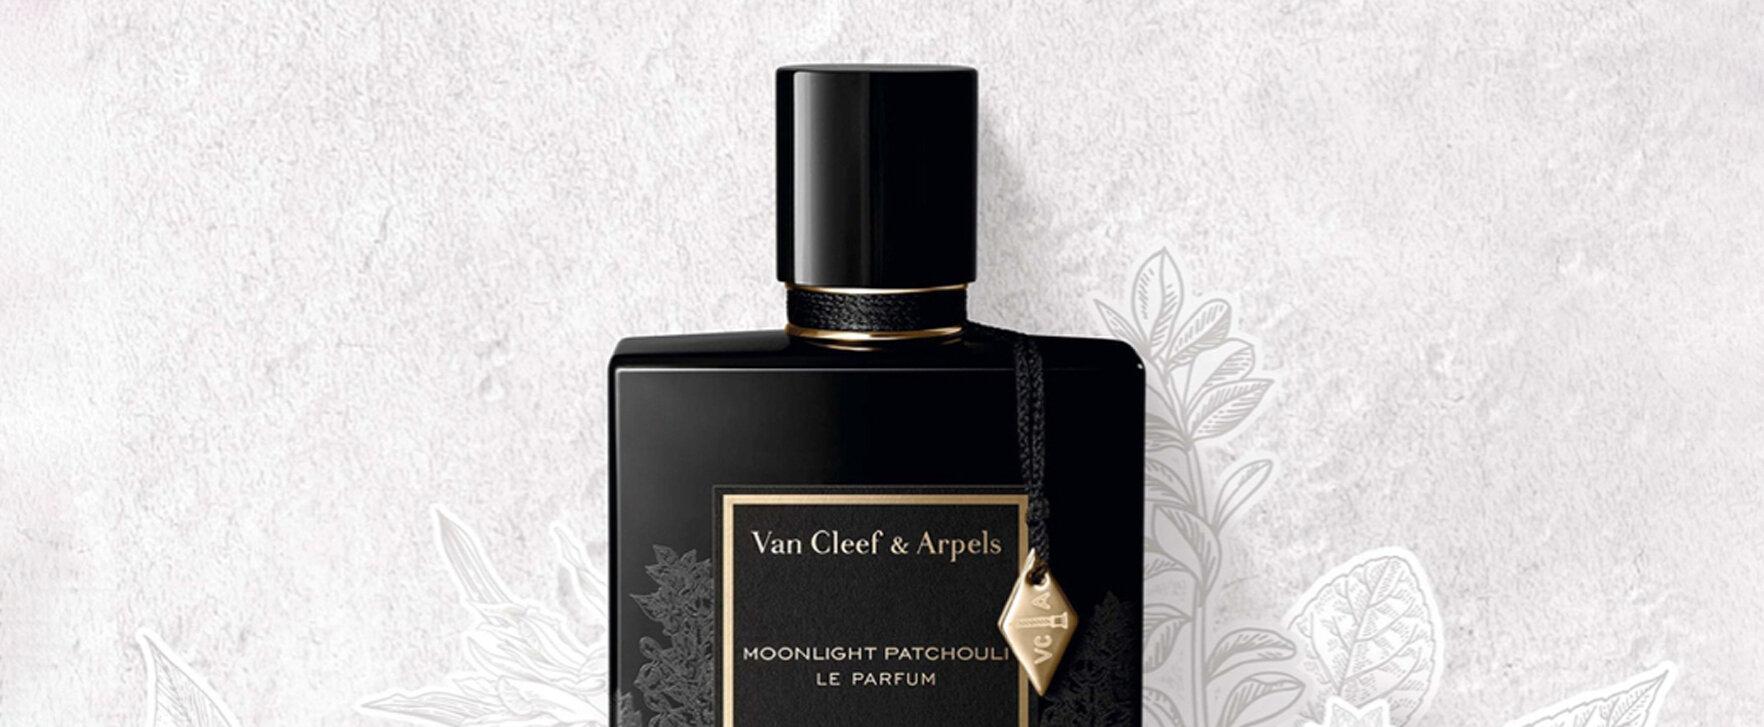 “Collection Extraordinaire - Moonlight Patchouli Le Parfum” - New Fragrance by Van Cleef & Arpels